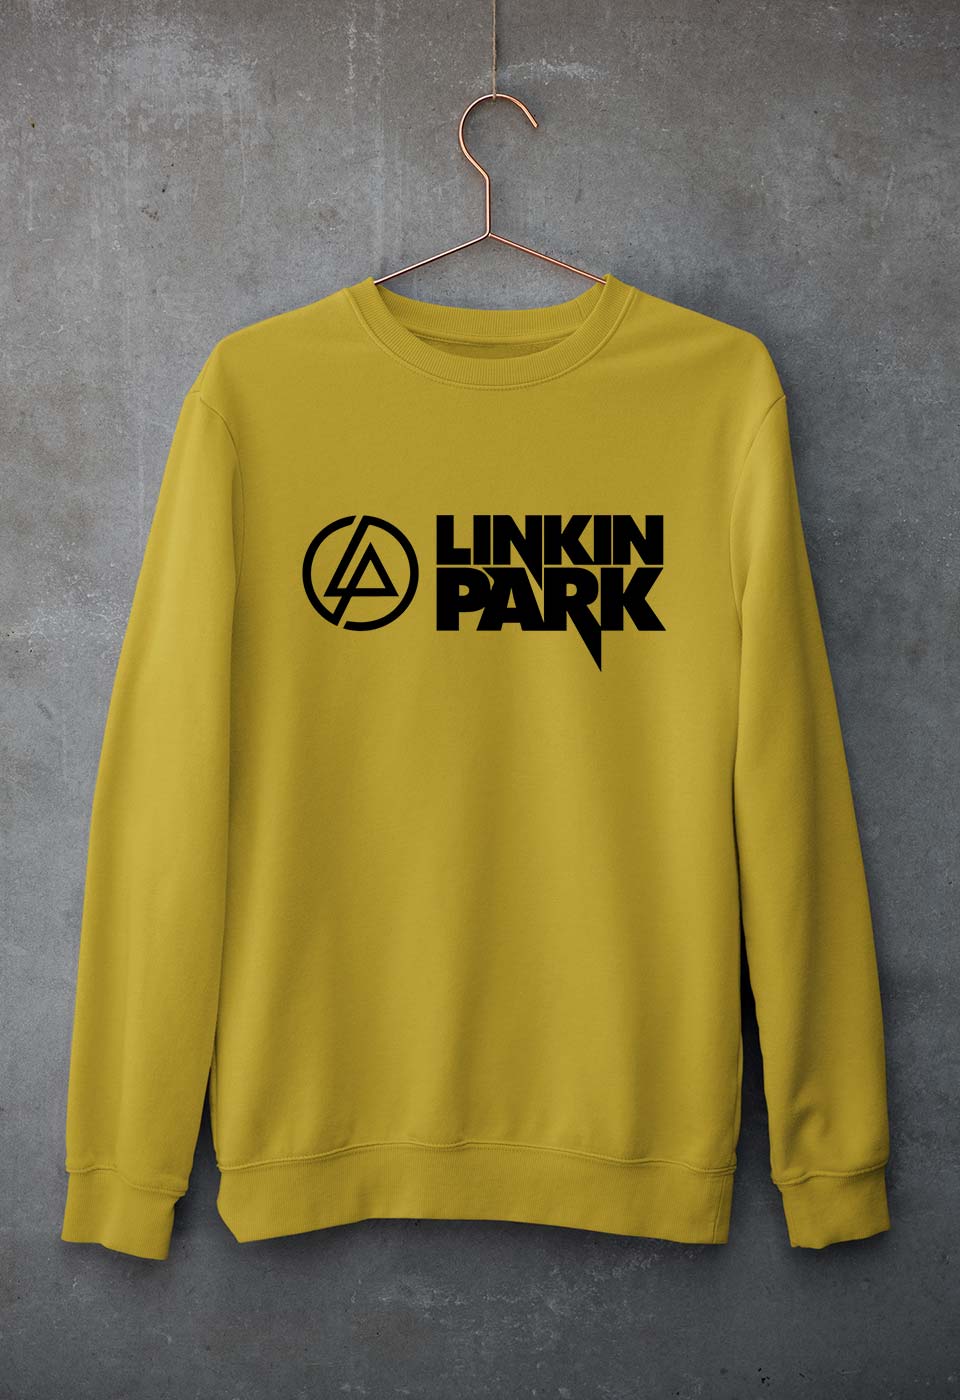 Linkin Park Unisex Sweatshirt for Men/Women-S(40 Inches)-Mustard Yellow-Ektarfa.online